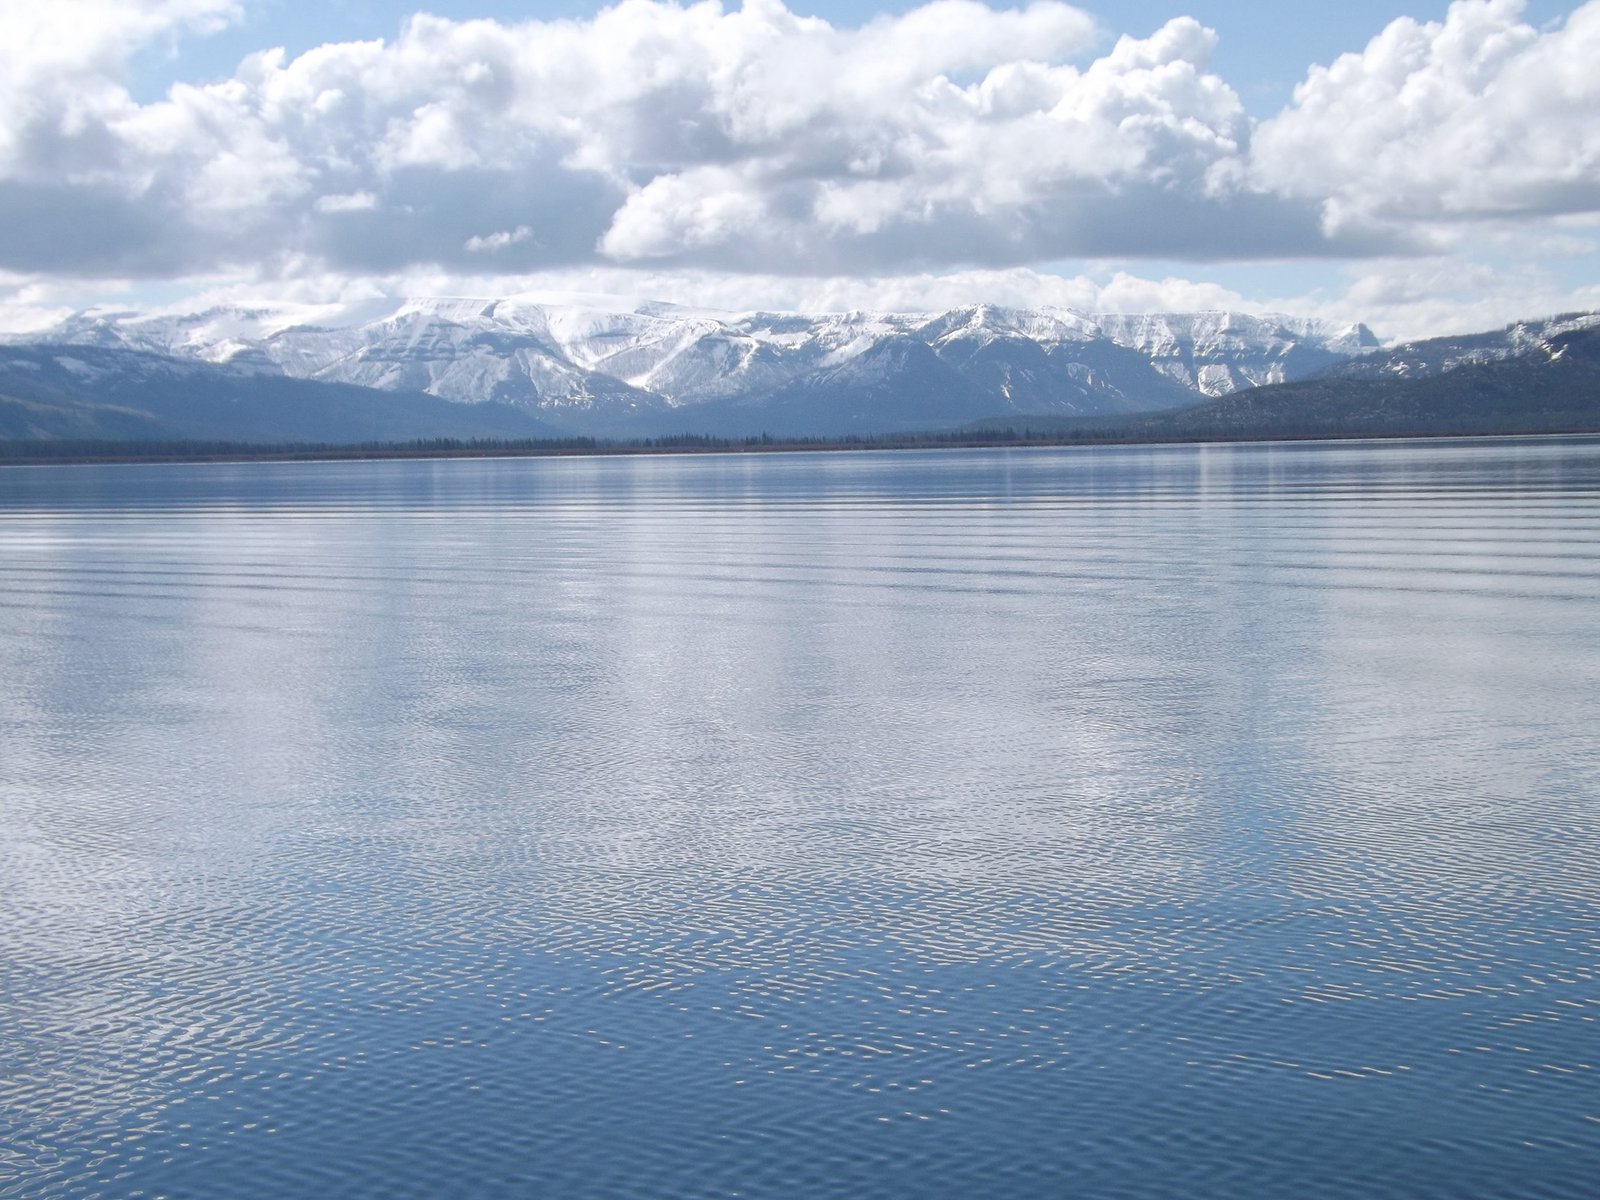 Yellowstone’s Lake Ice Isn’t Melting Like Others